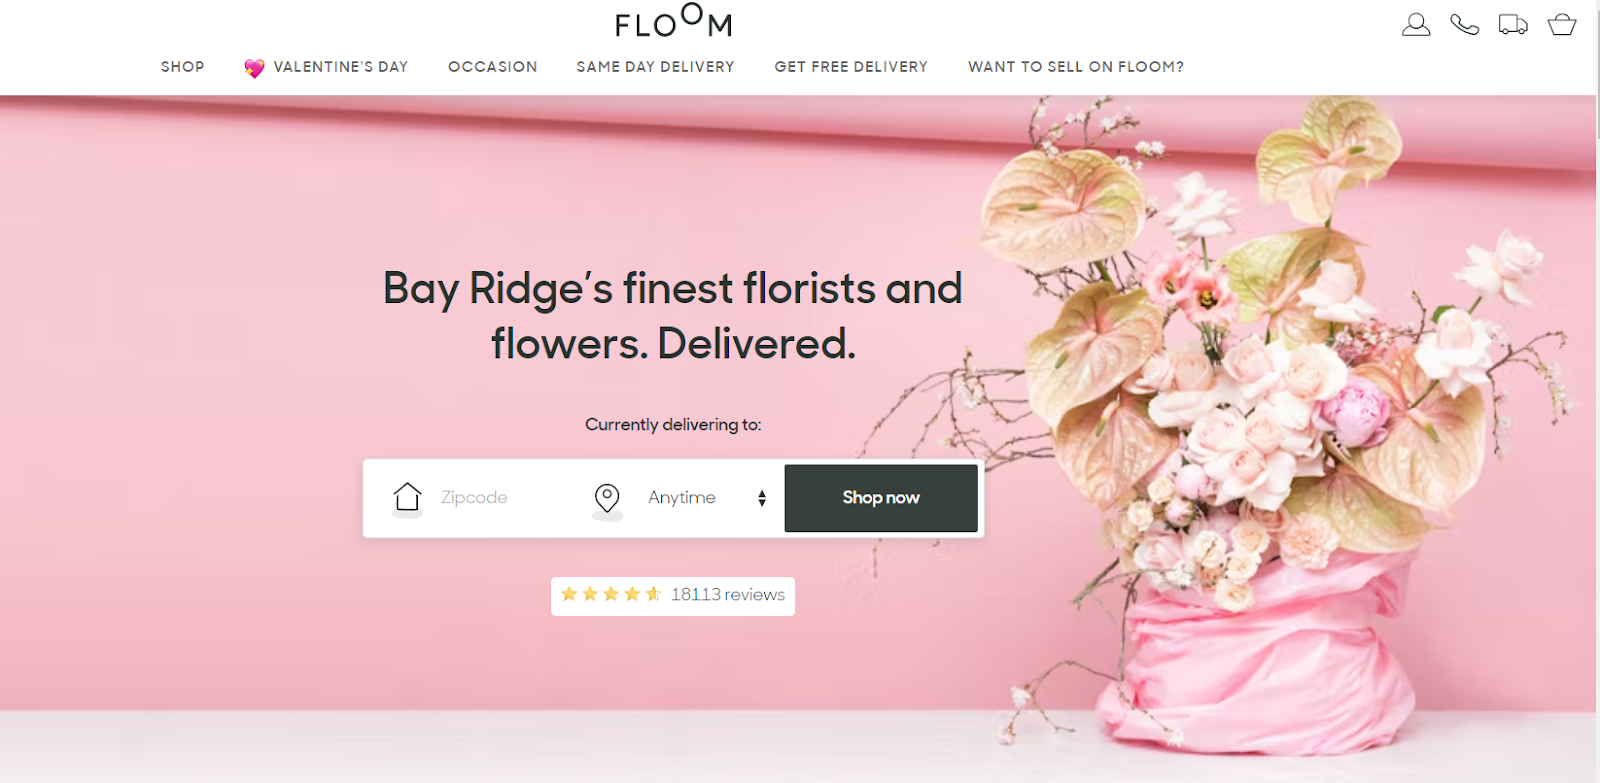 Best florist websites — design example from Floom.